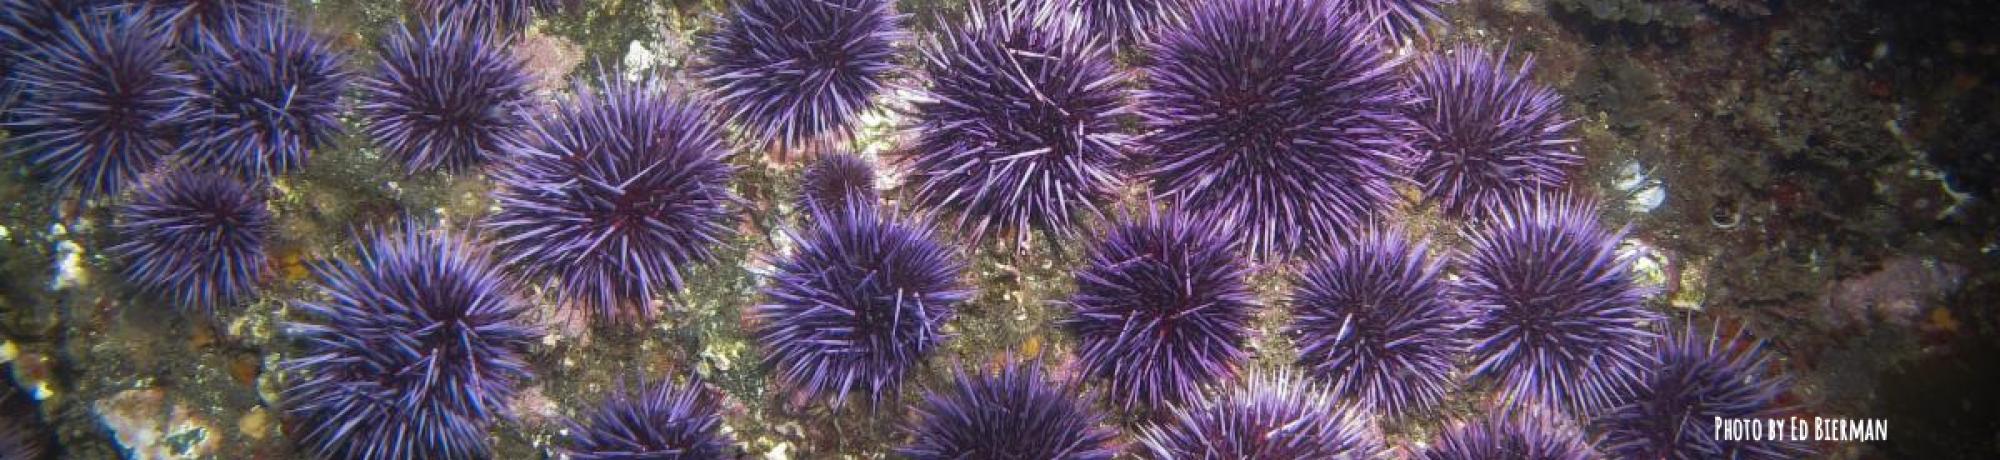 Native CA purple sea urchins on rock